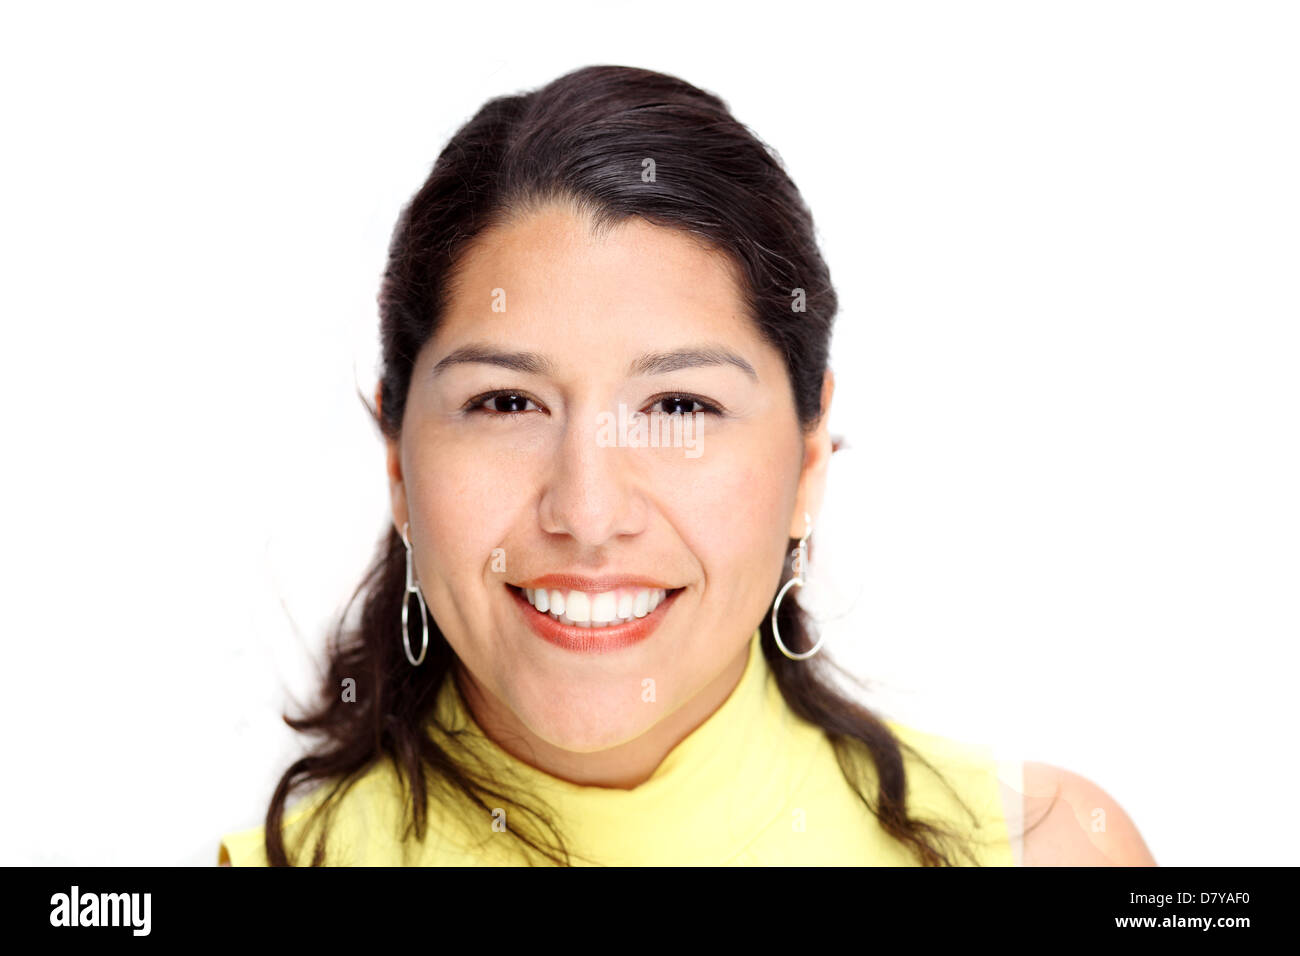 Hispanic woman on white background Stock Photo